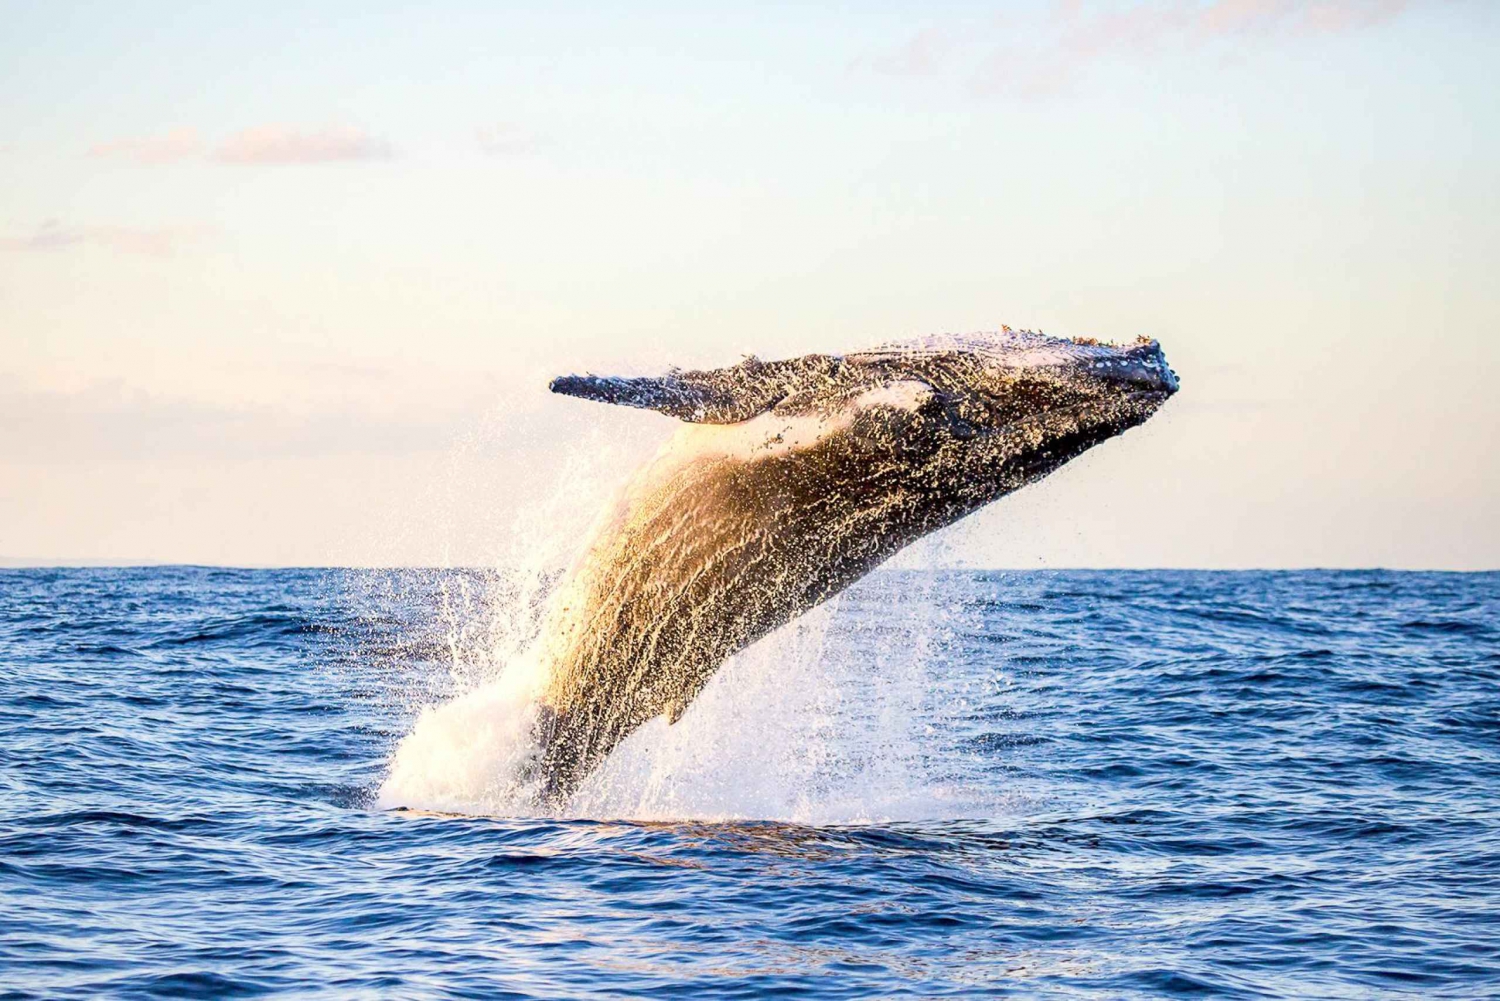 Oahu: Waikiki Eco-Friendly Morning Whale Watching Cruise